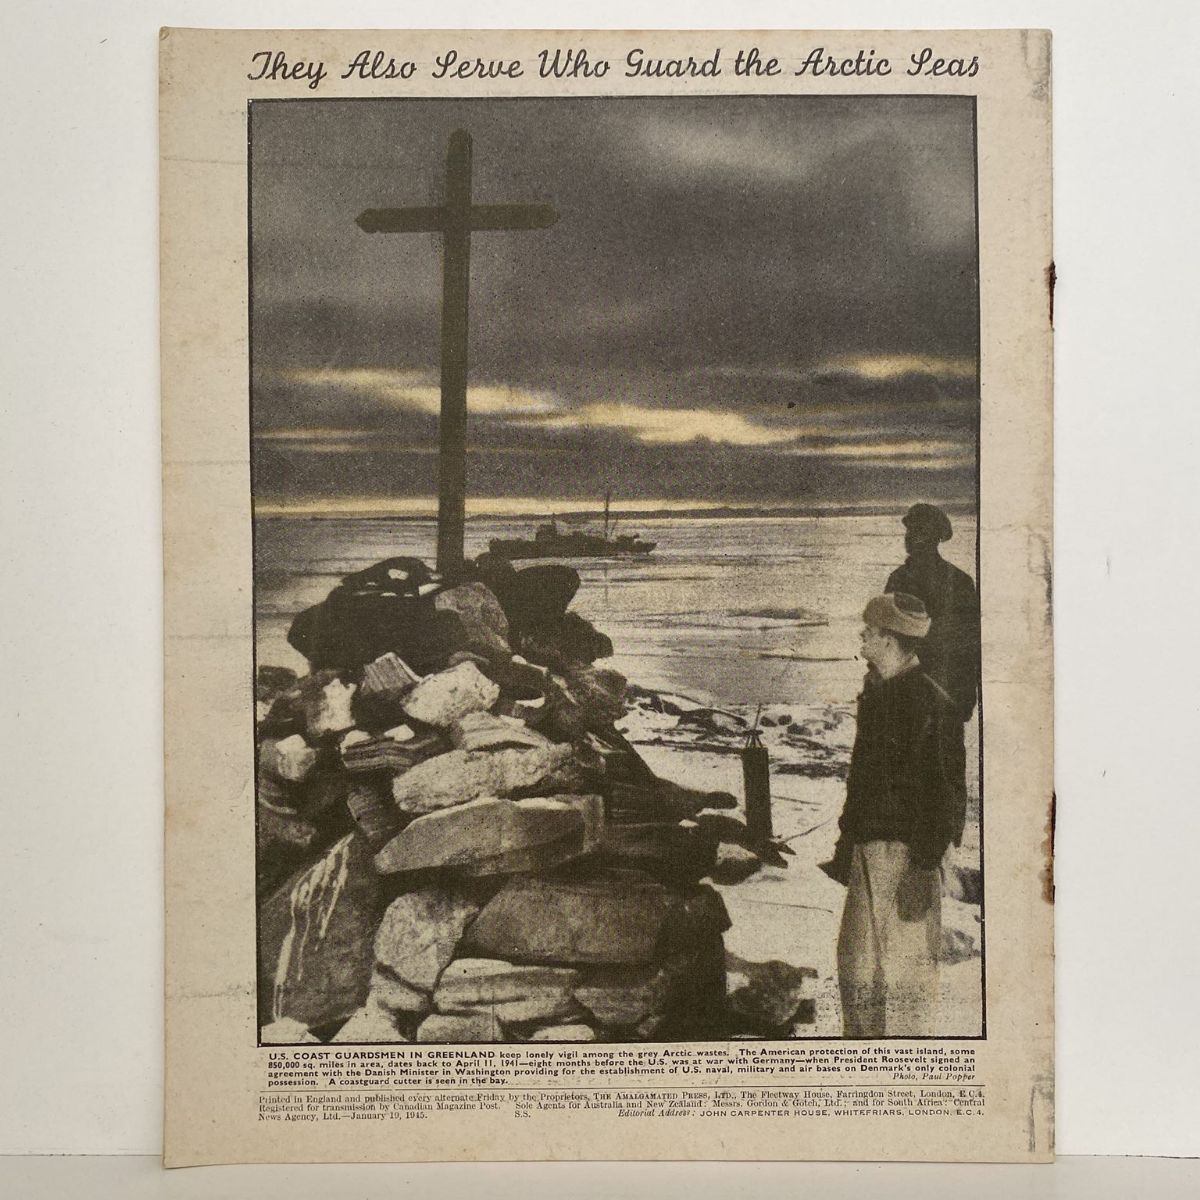 THE WAR ILLUSTRATED - Vol 8, No 198, 19th Jan 1945